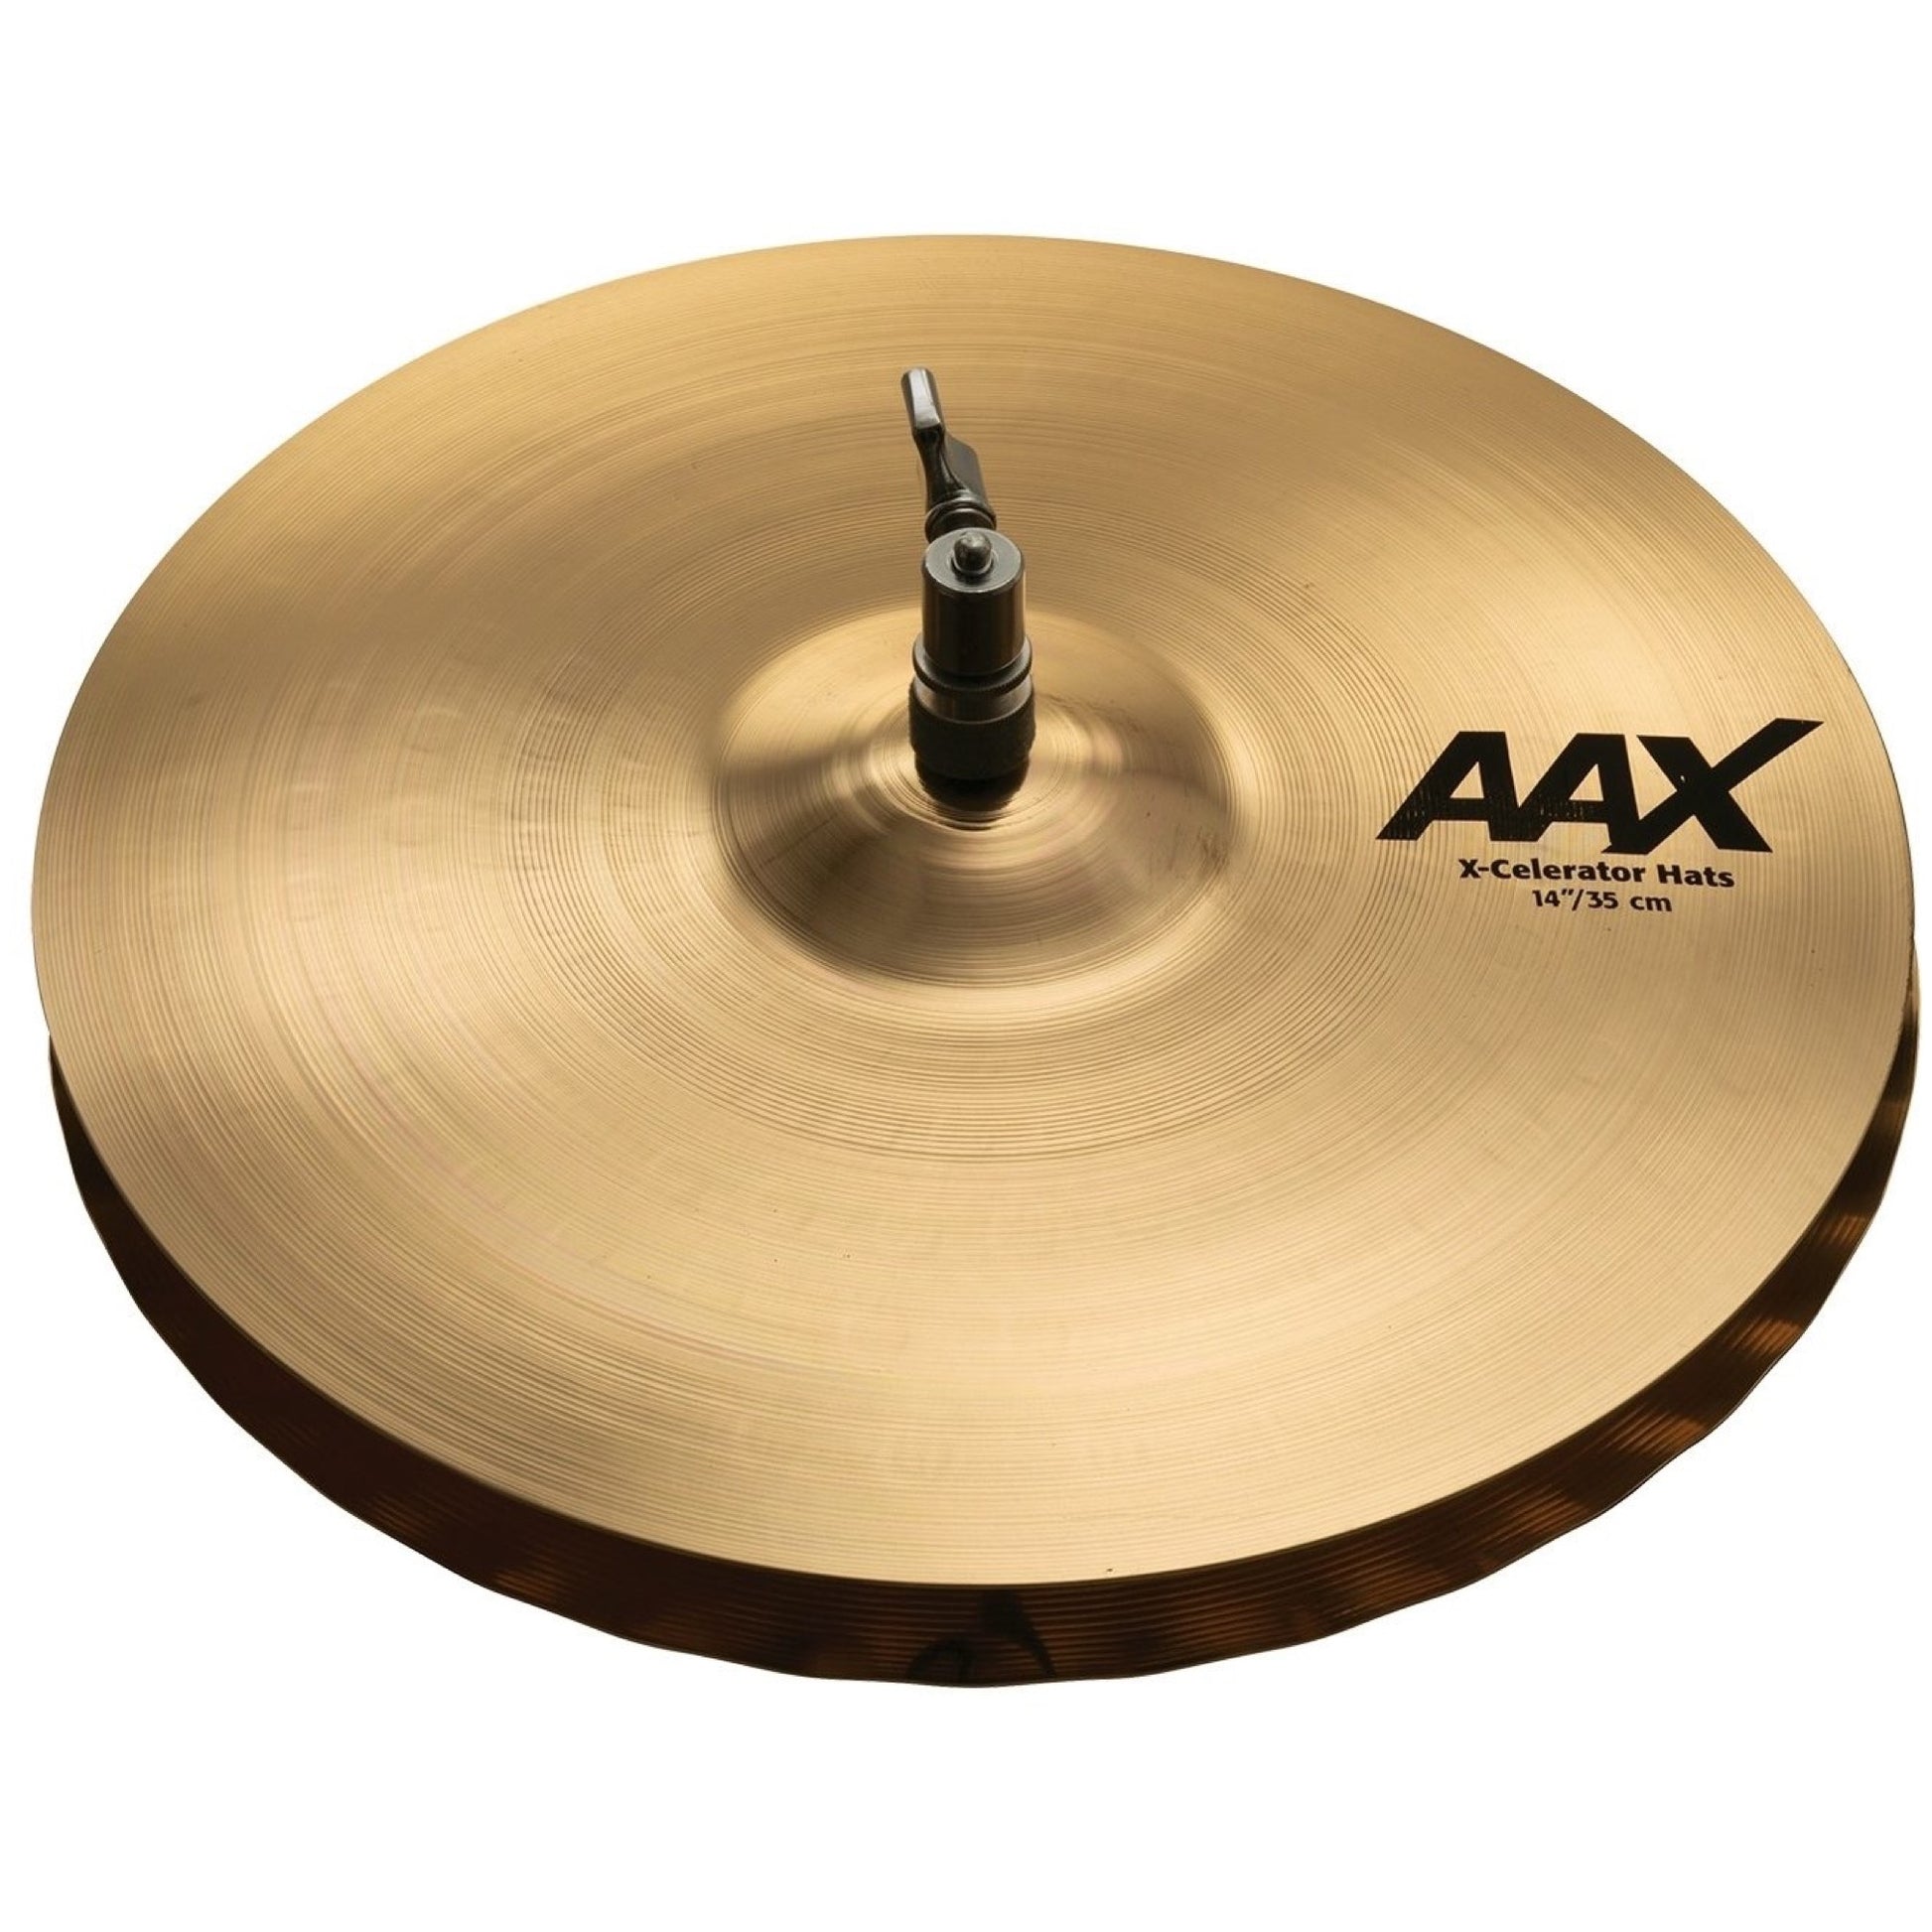 Sabian AAX Xcelerator Hi-Hat Cymbals (Pair), Brilliant Finish, 14 Inch